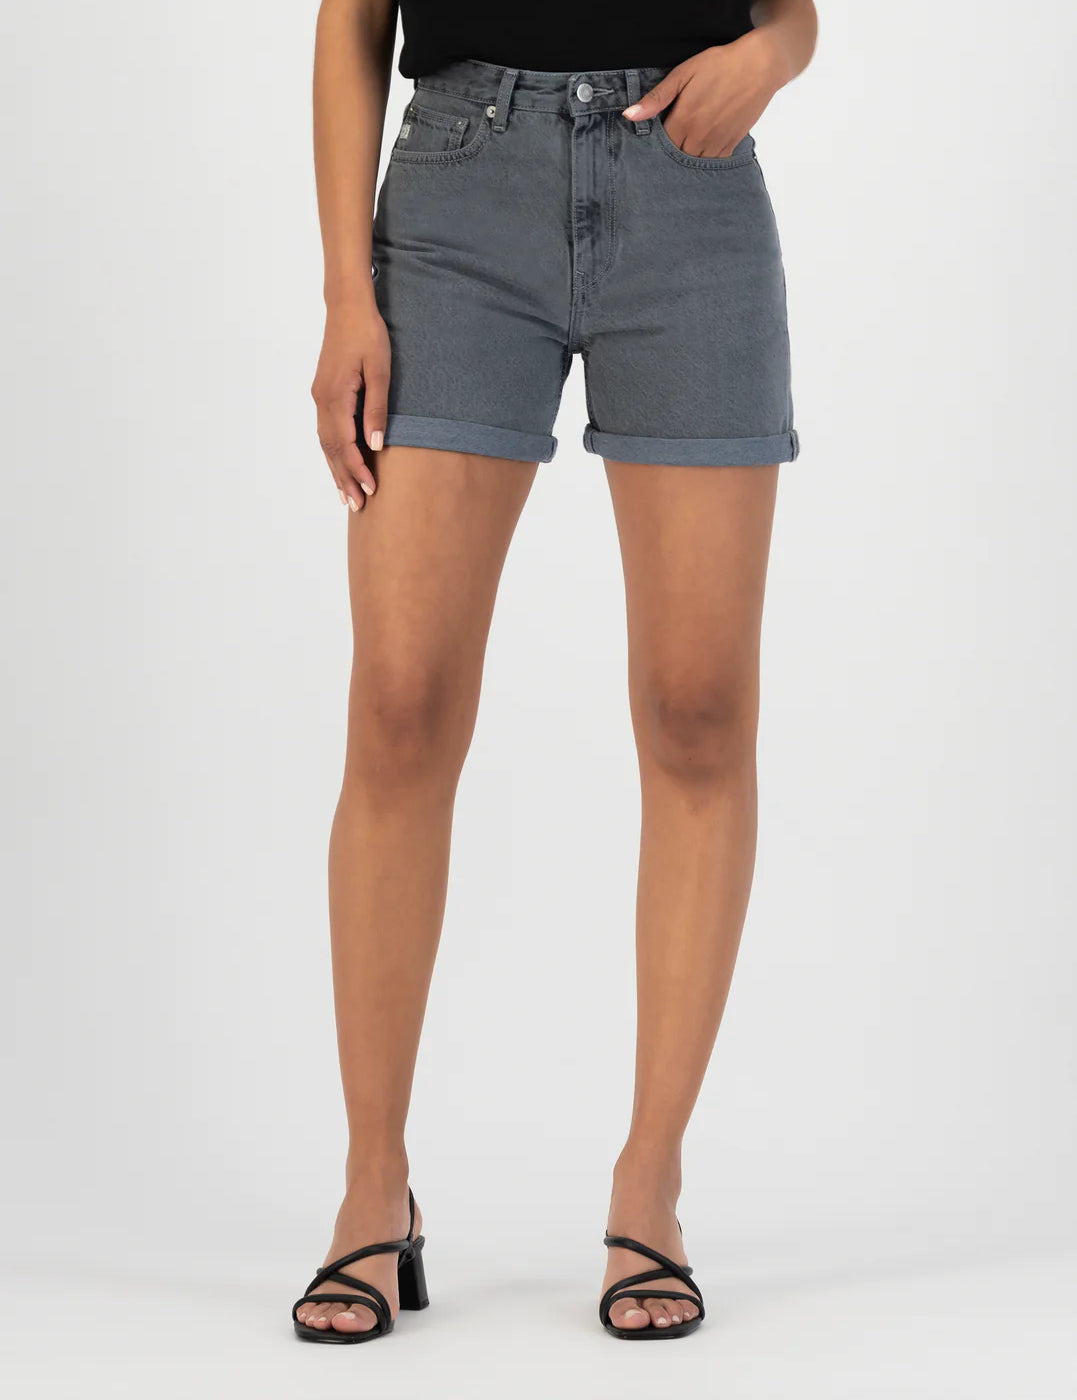 Women-Ethical-Jeans-Marilyn-Shorts-Stone-Grey-Half-Front_540x778_2x_jpg.webp